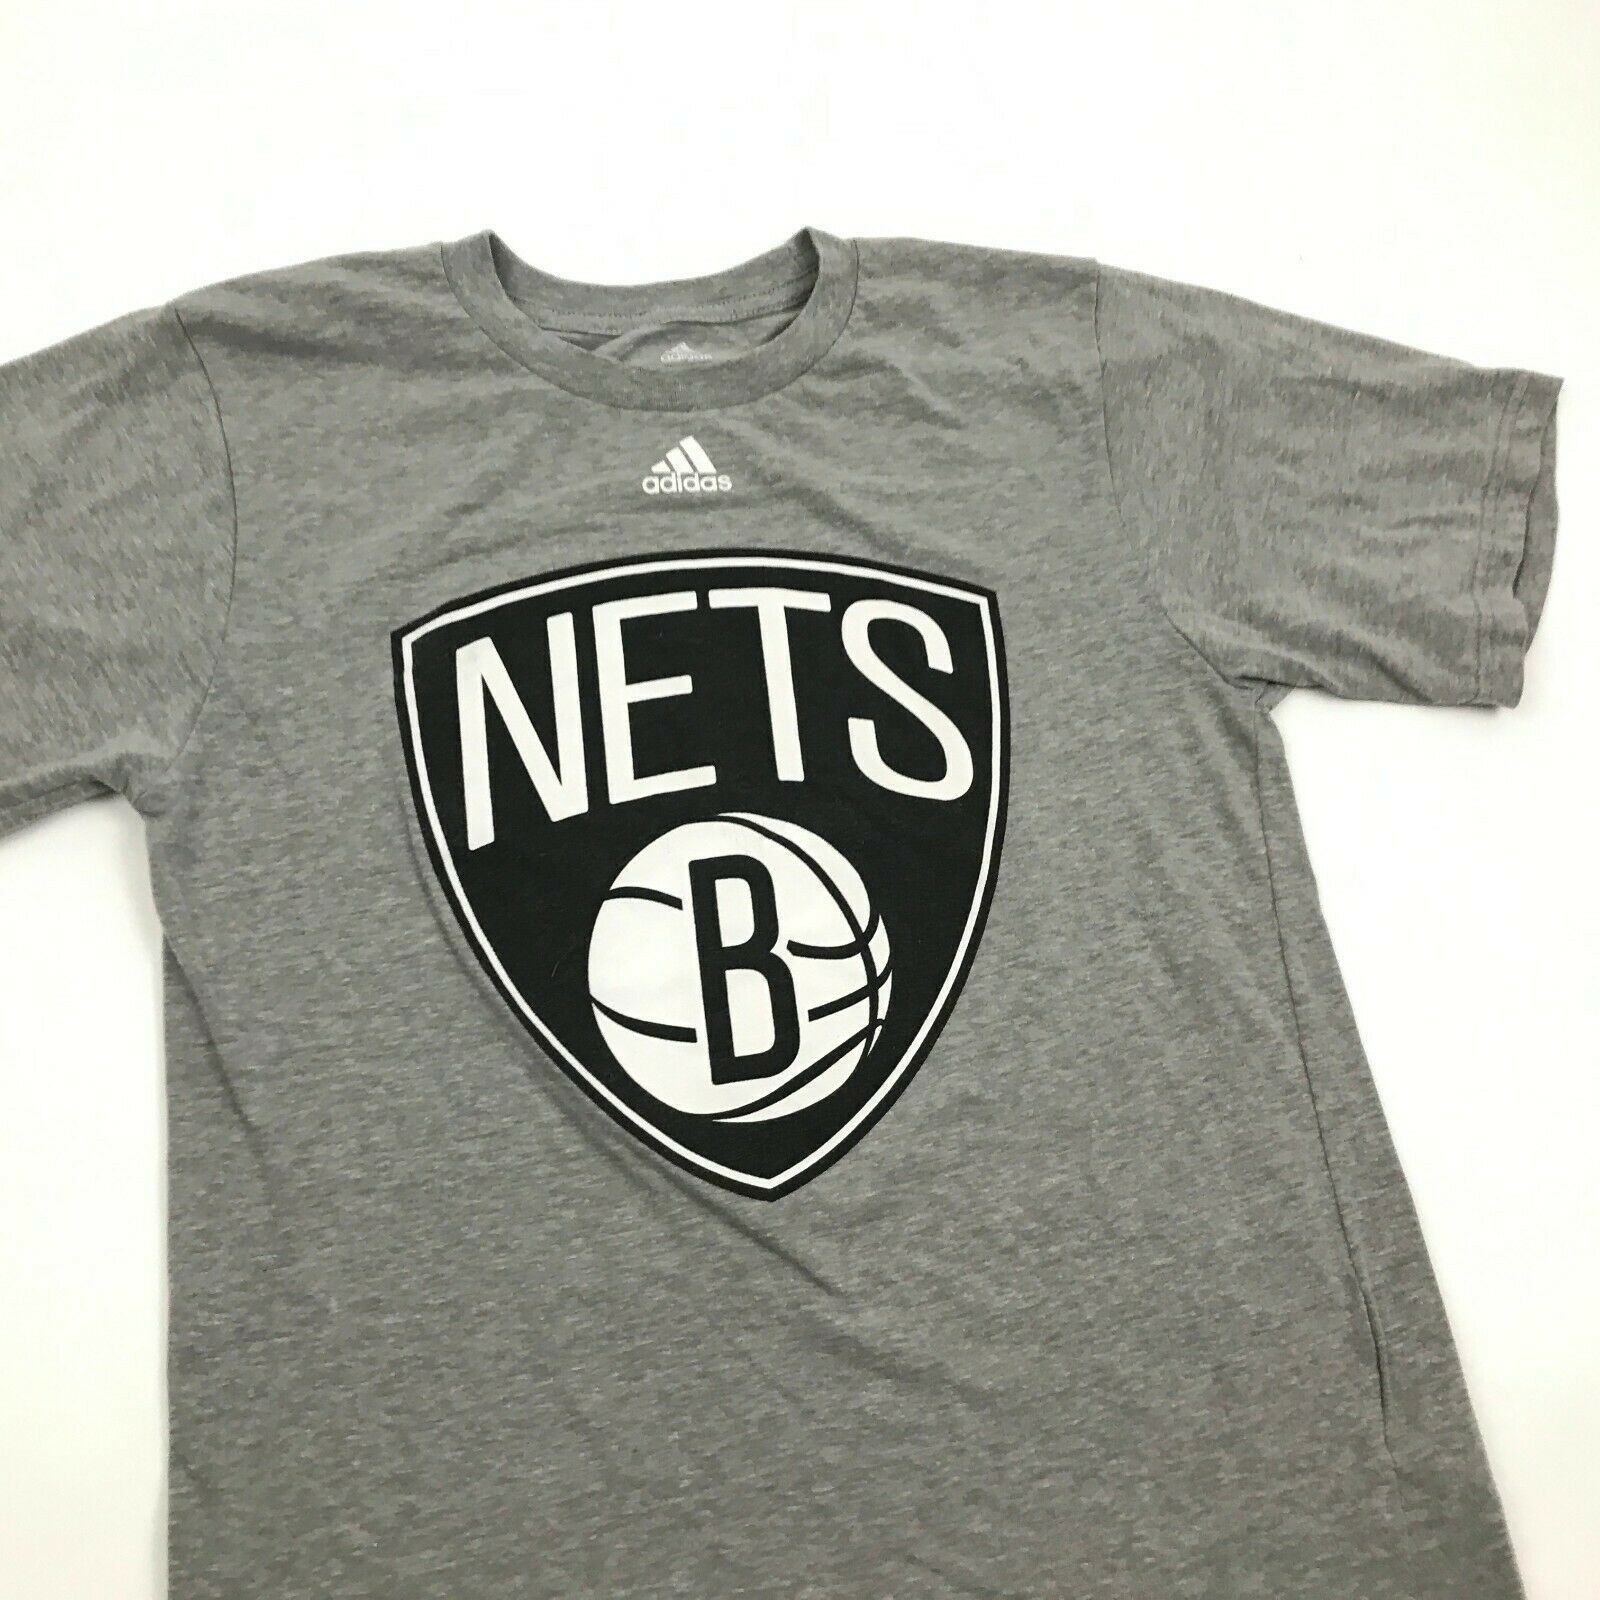 Adidas Brooklyn Nets Shirt Youth Size Large 14-16 Gray Heather Short ...